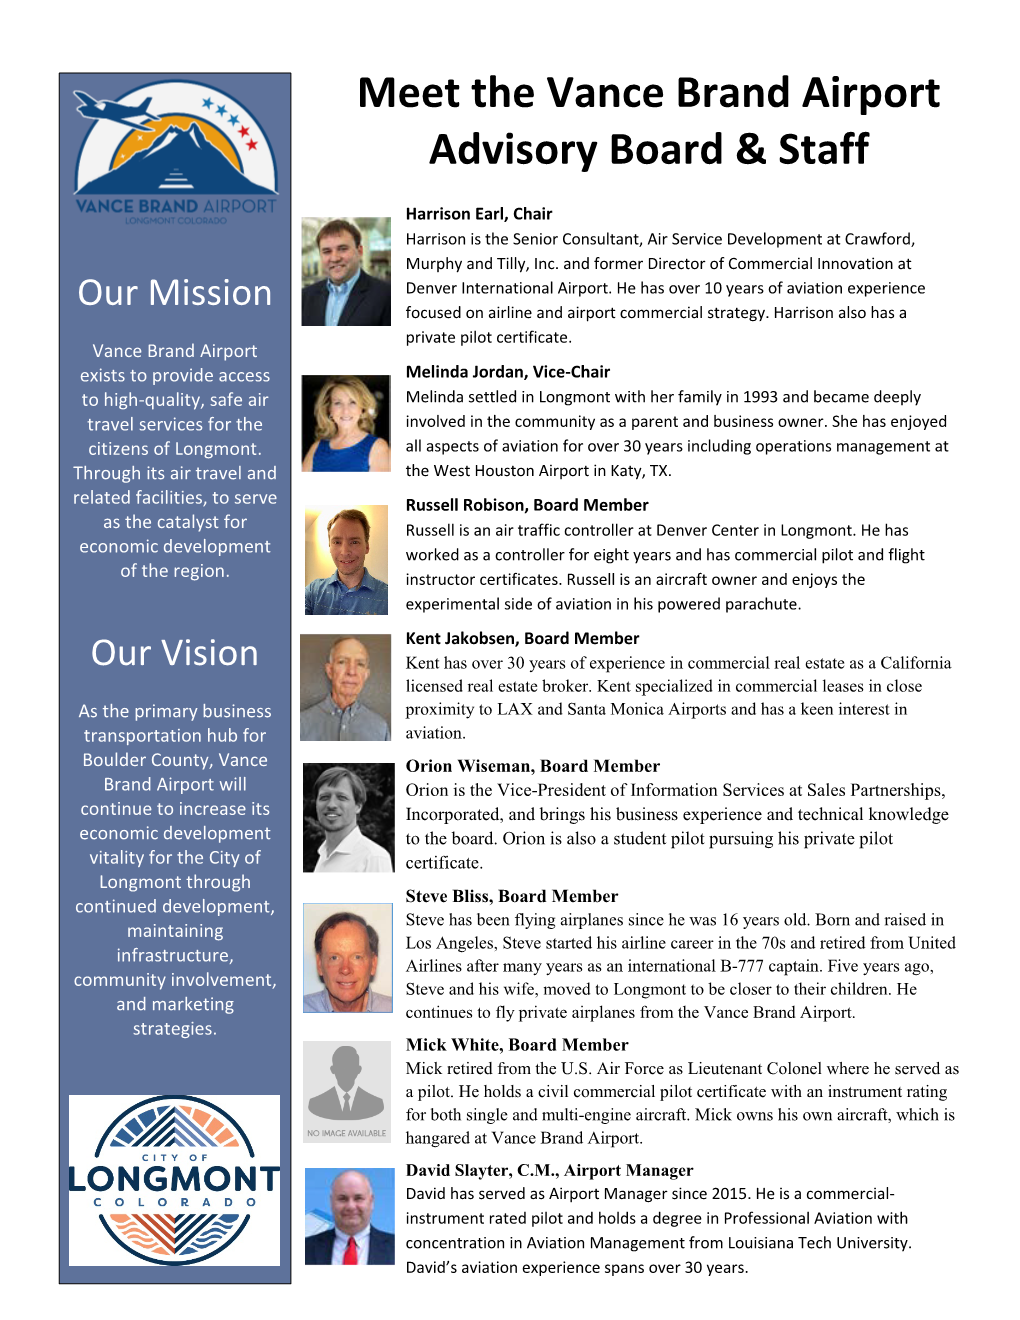 Meet the Vance Brand Airport Advisory Board & Staff